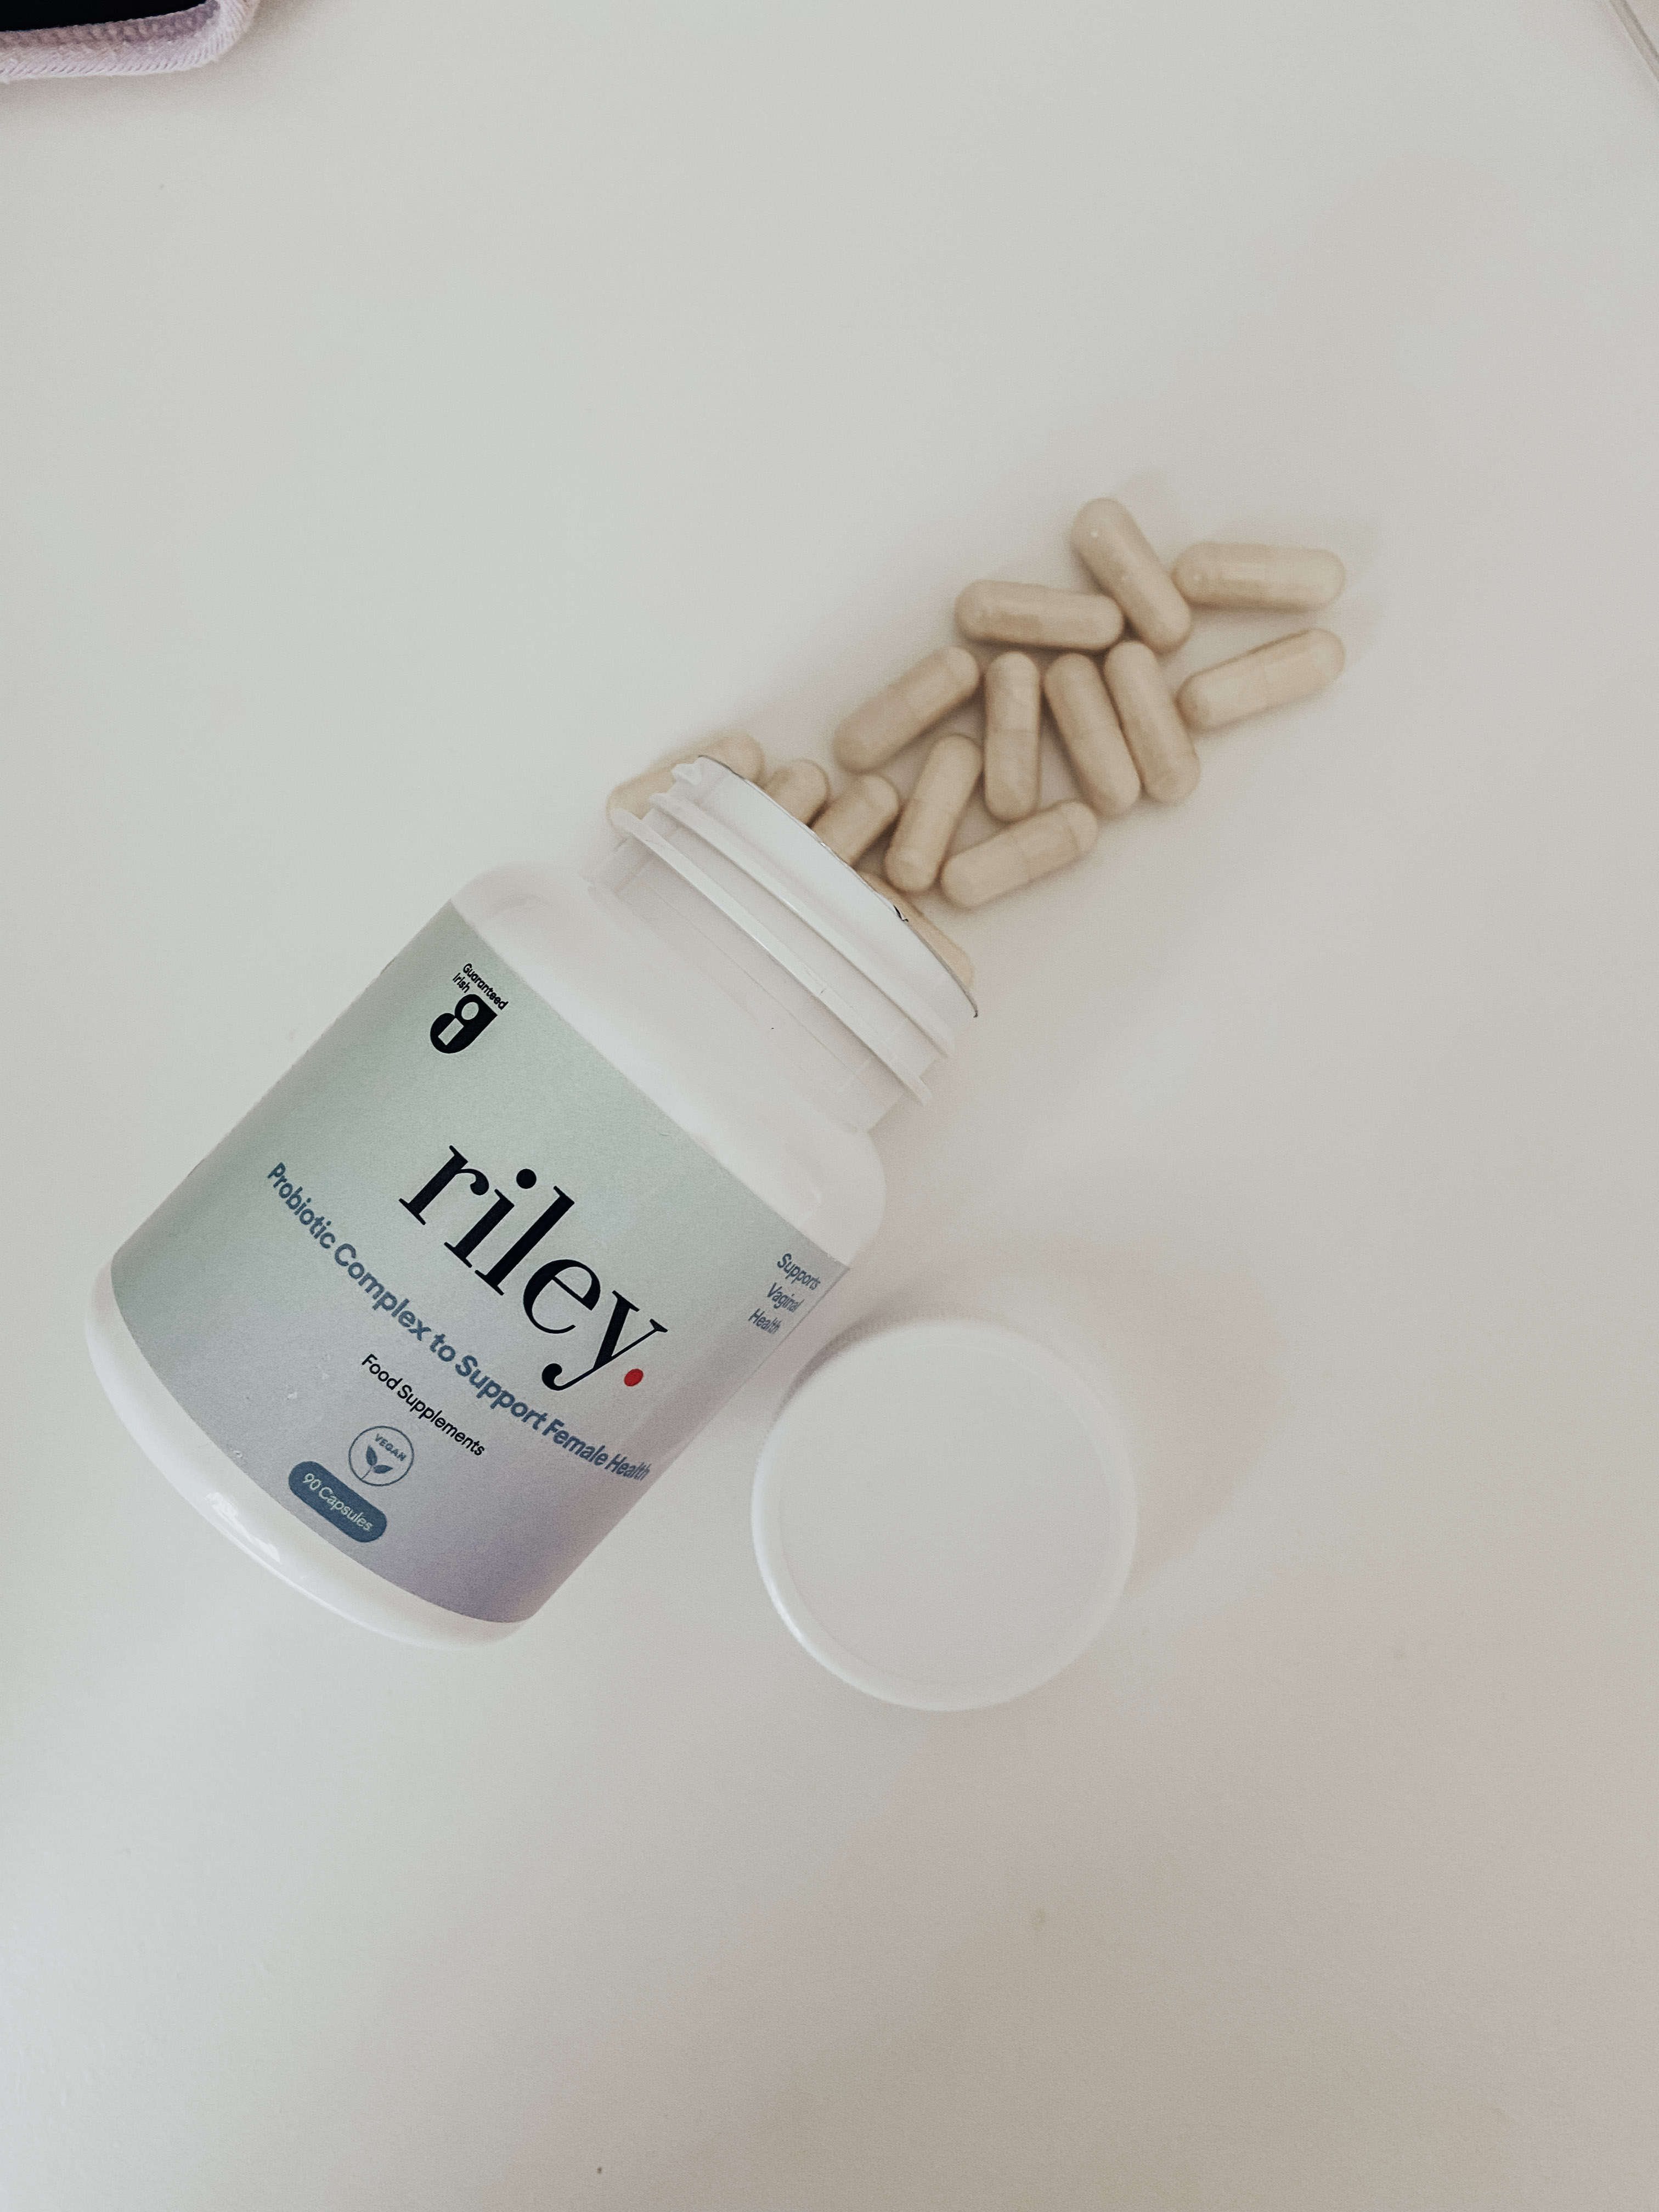 Riley probiotic supplement